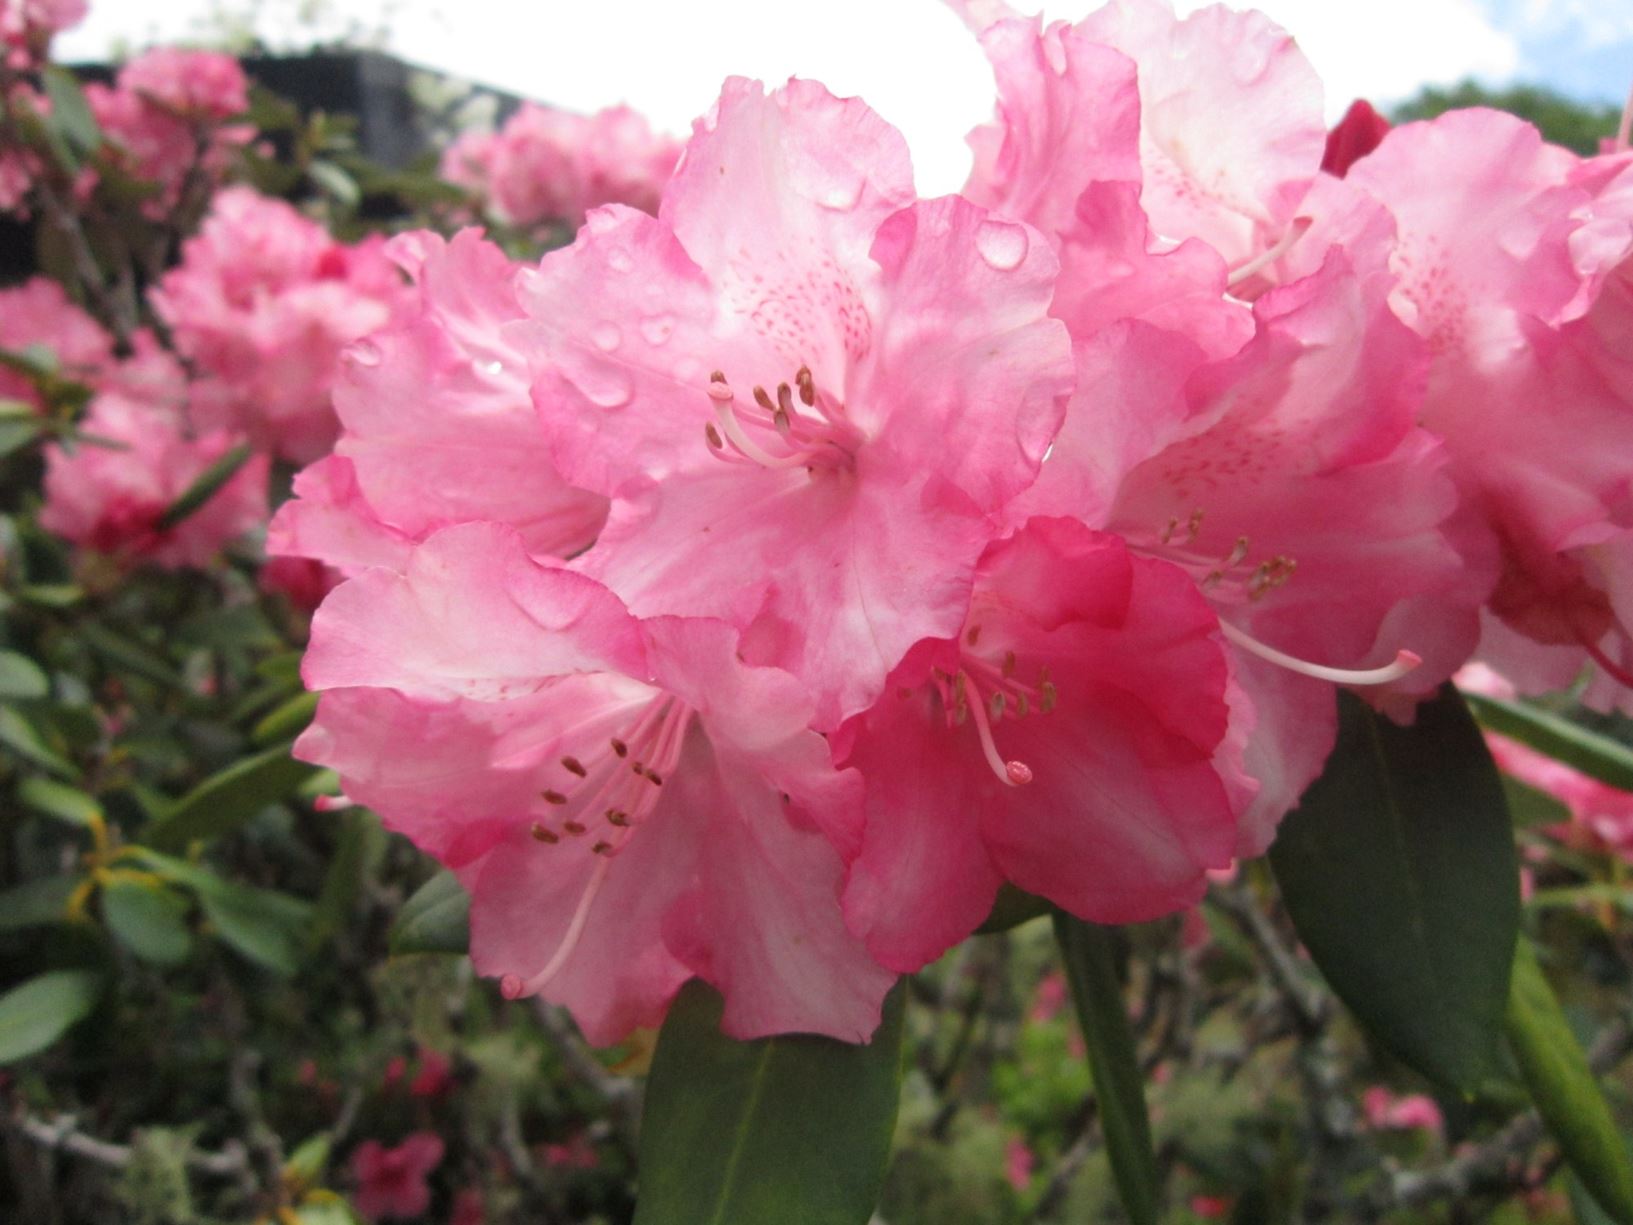 Rhododendron 'Hachmann's Marlis'